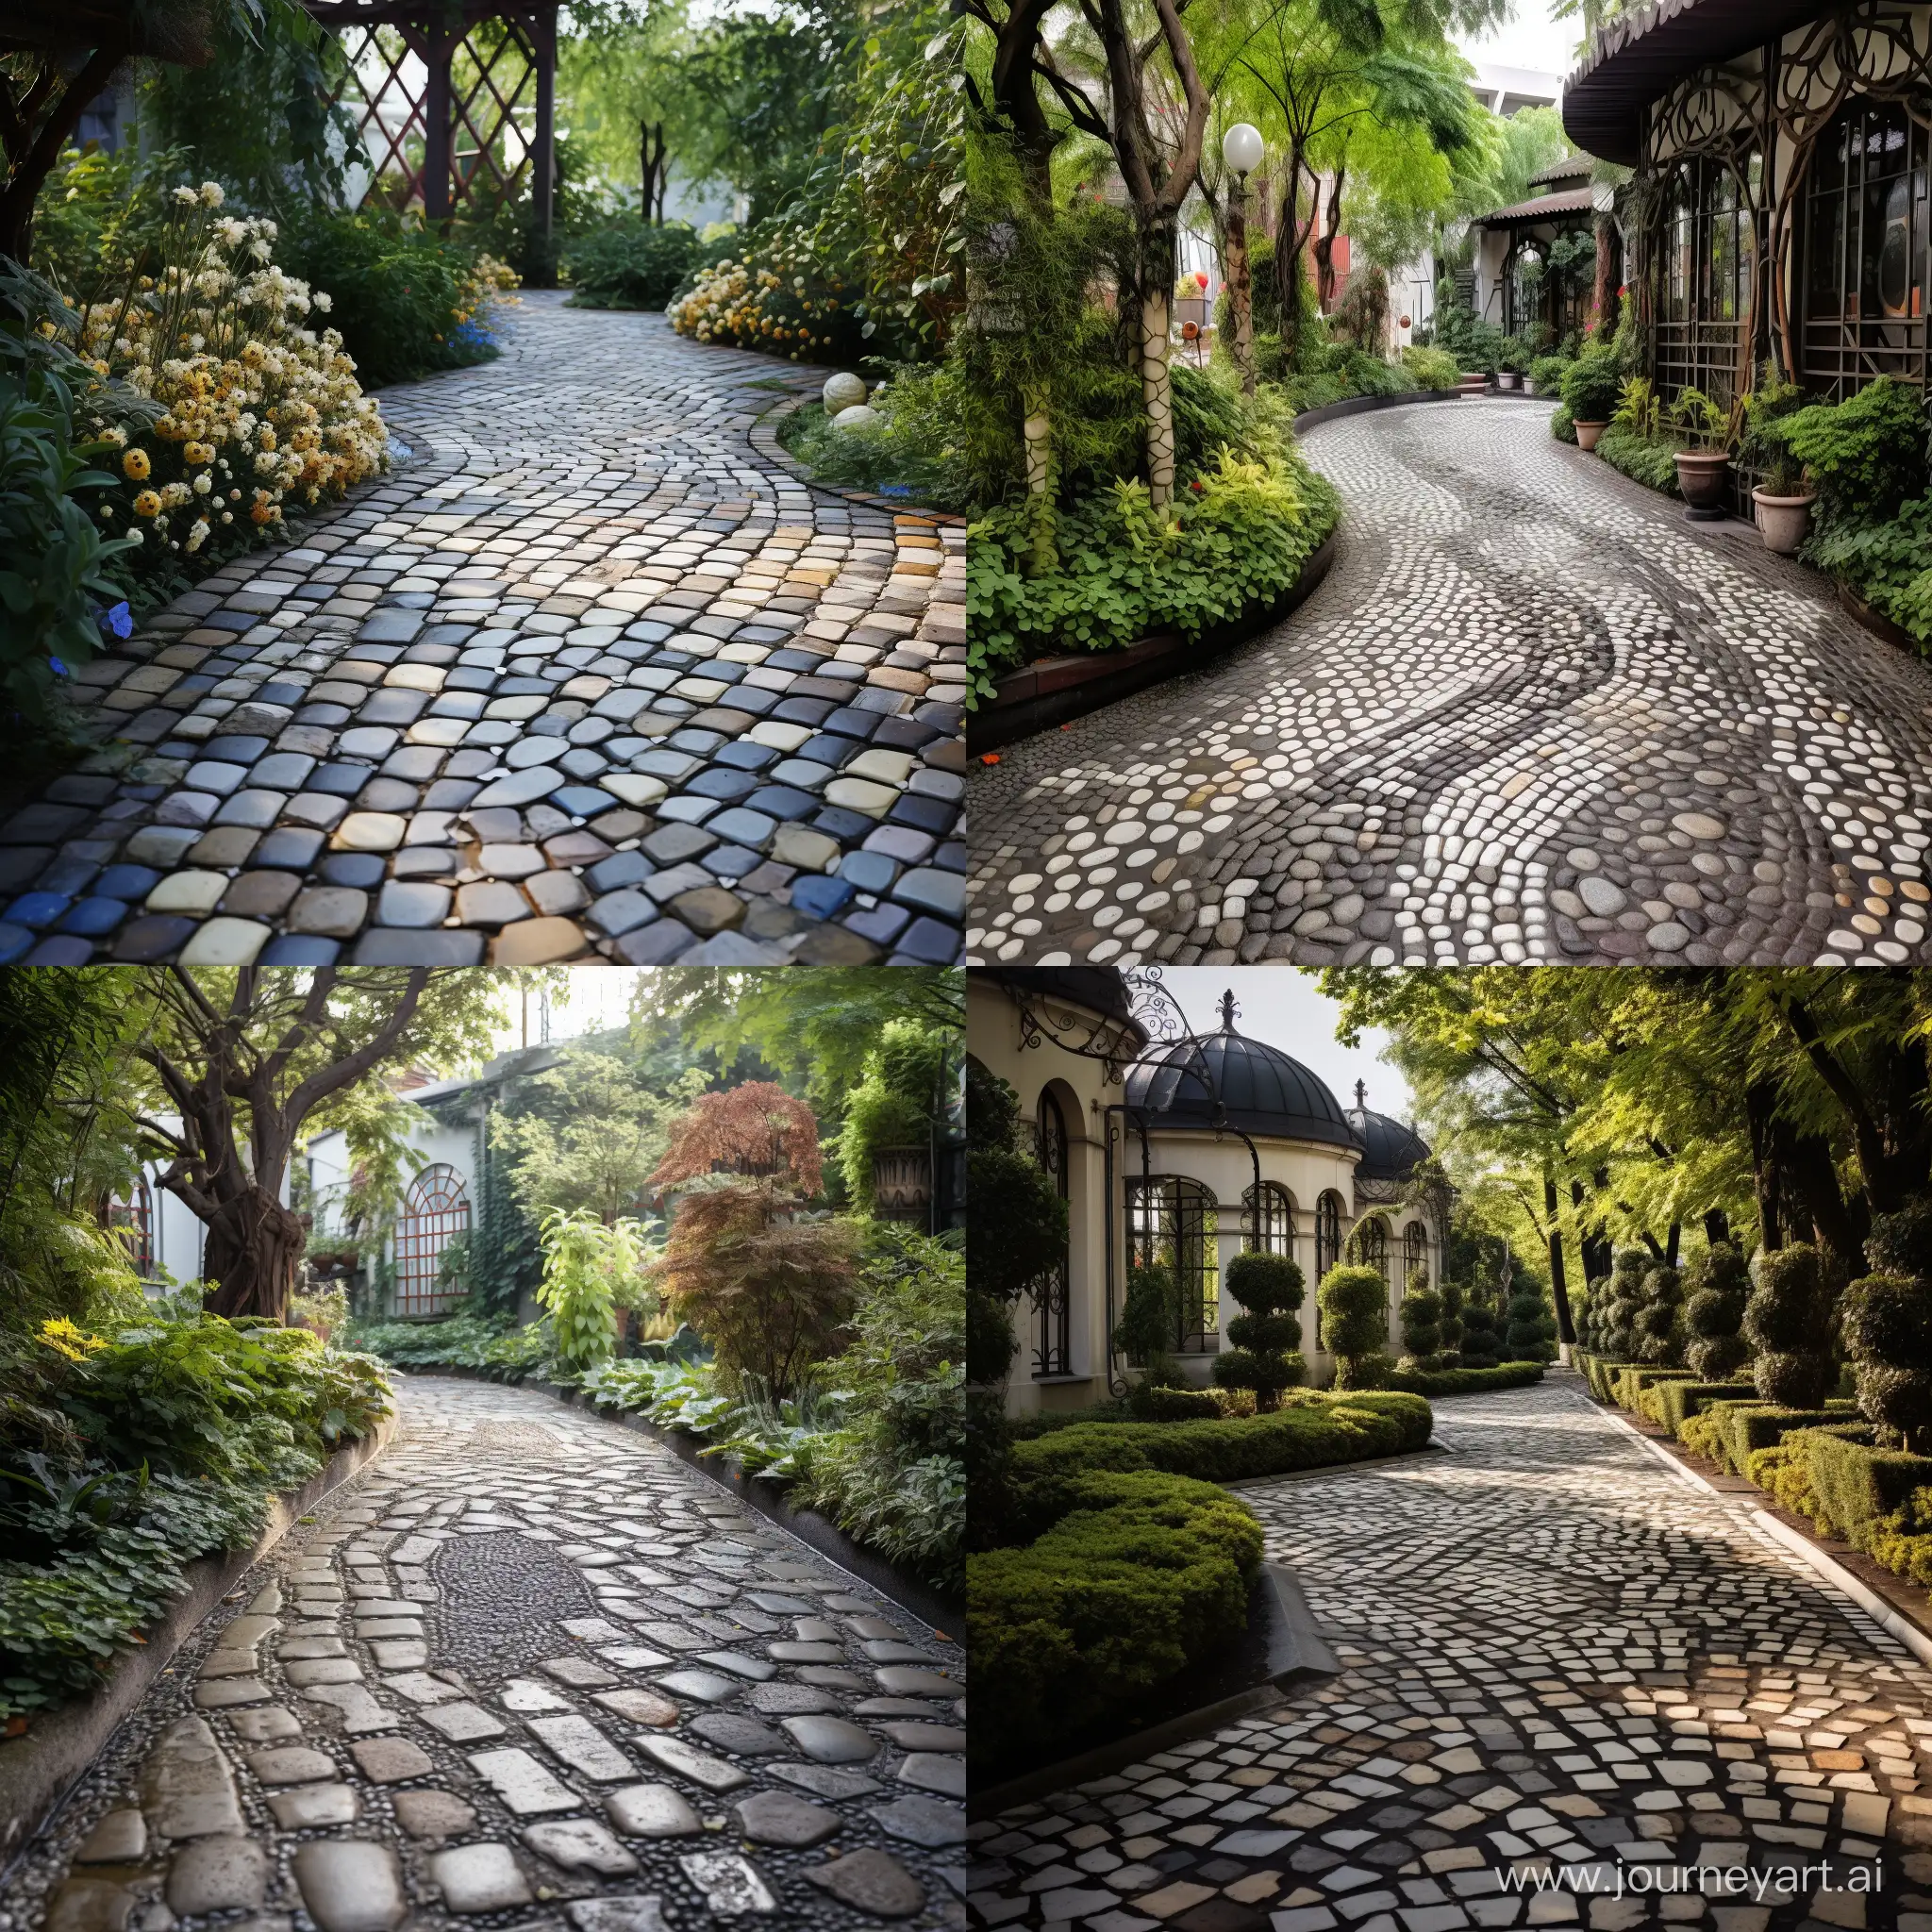 Villa-Garden-Cobblestone-Path-Serene-Patterned-Pedestrian-Walkway